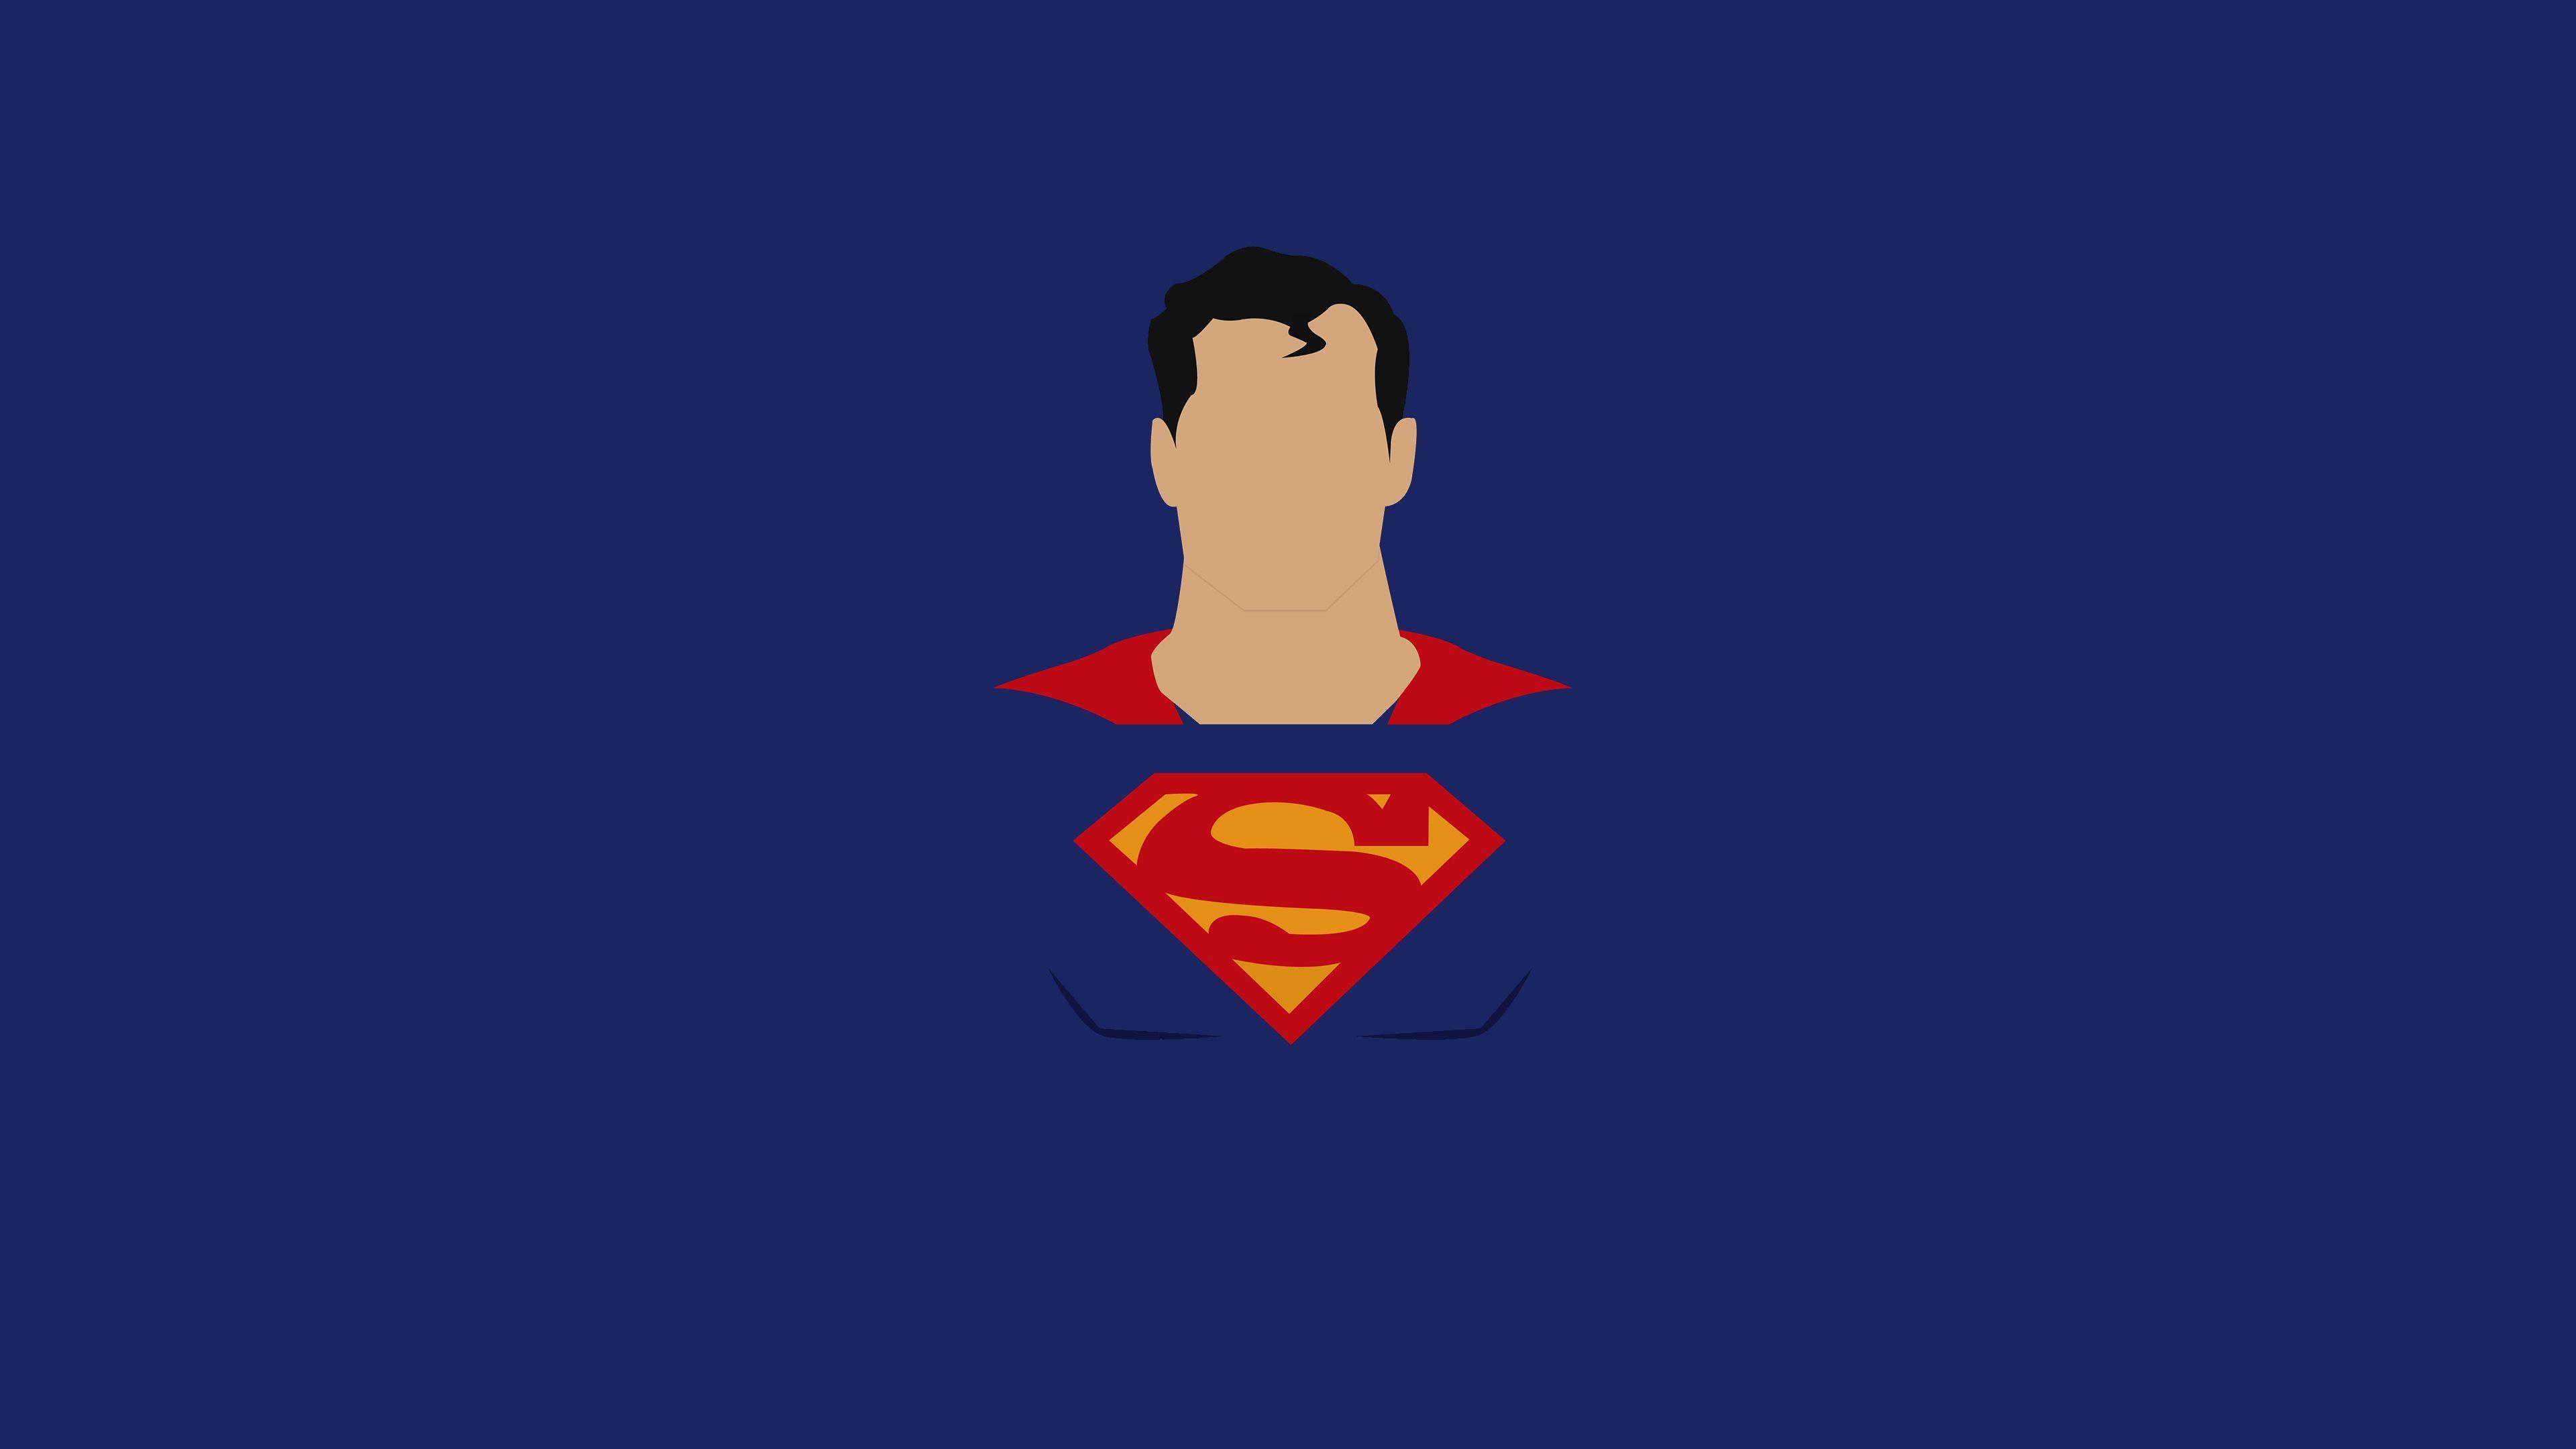 Superman Minimalist Wallpapers Top Free Superman Minimalist Backgrounds Wallpaperaccess